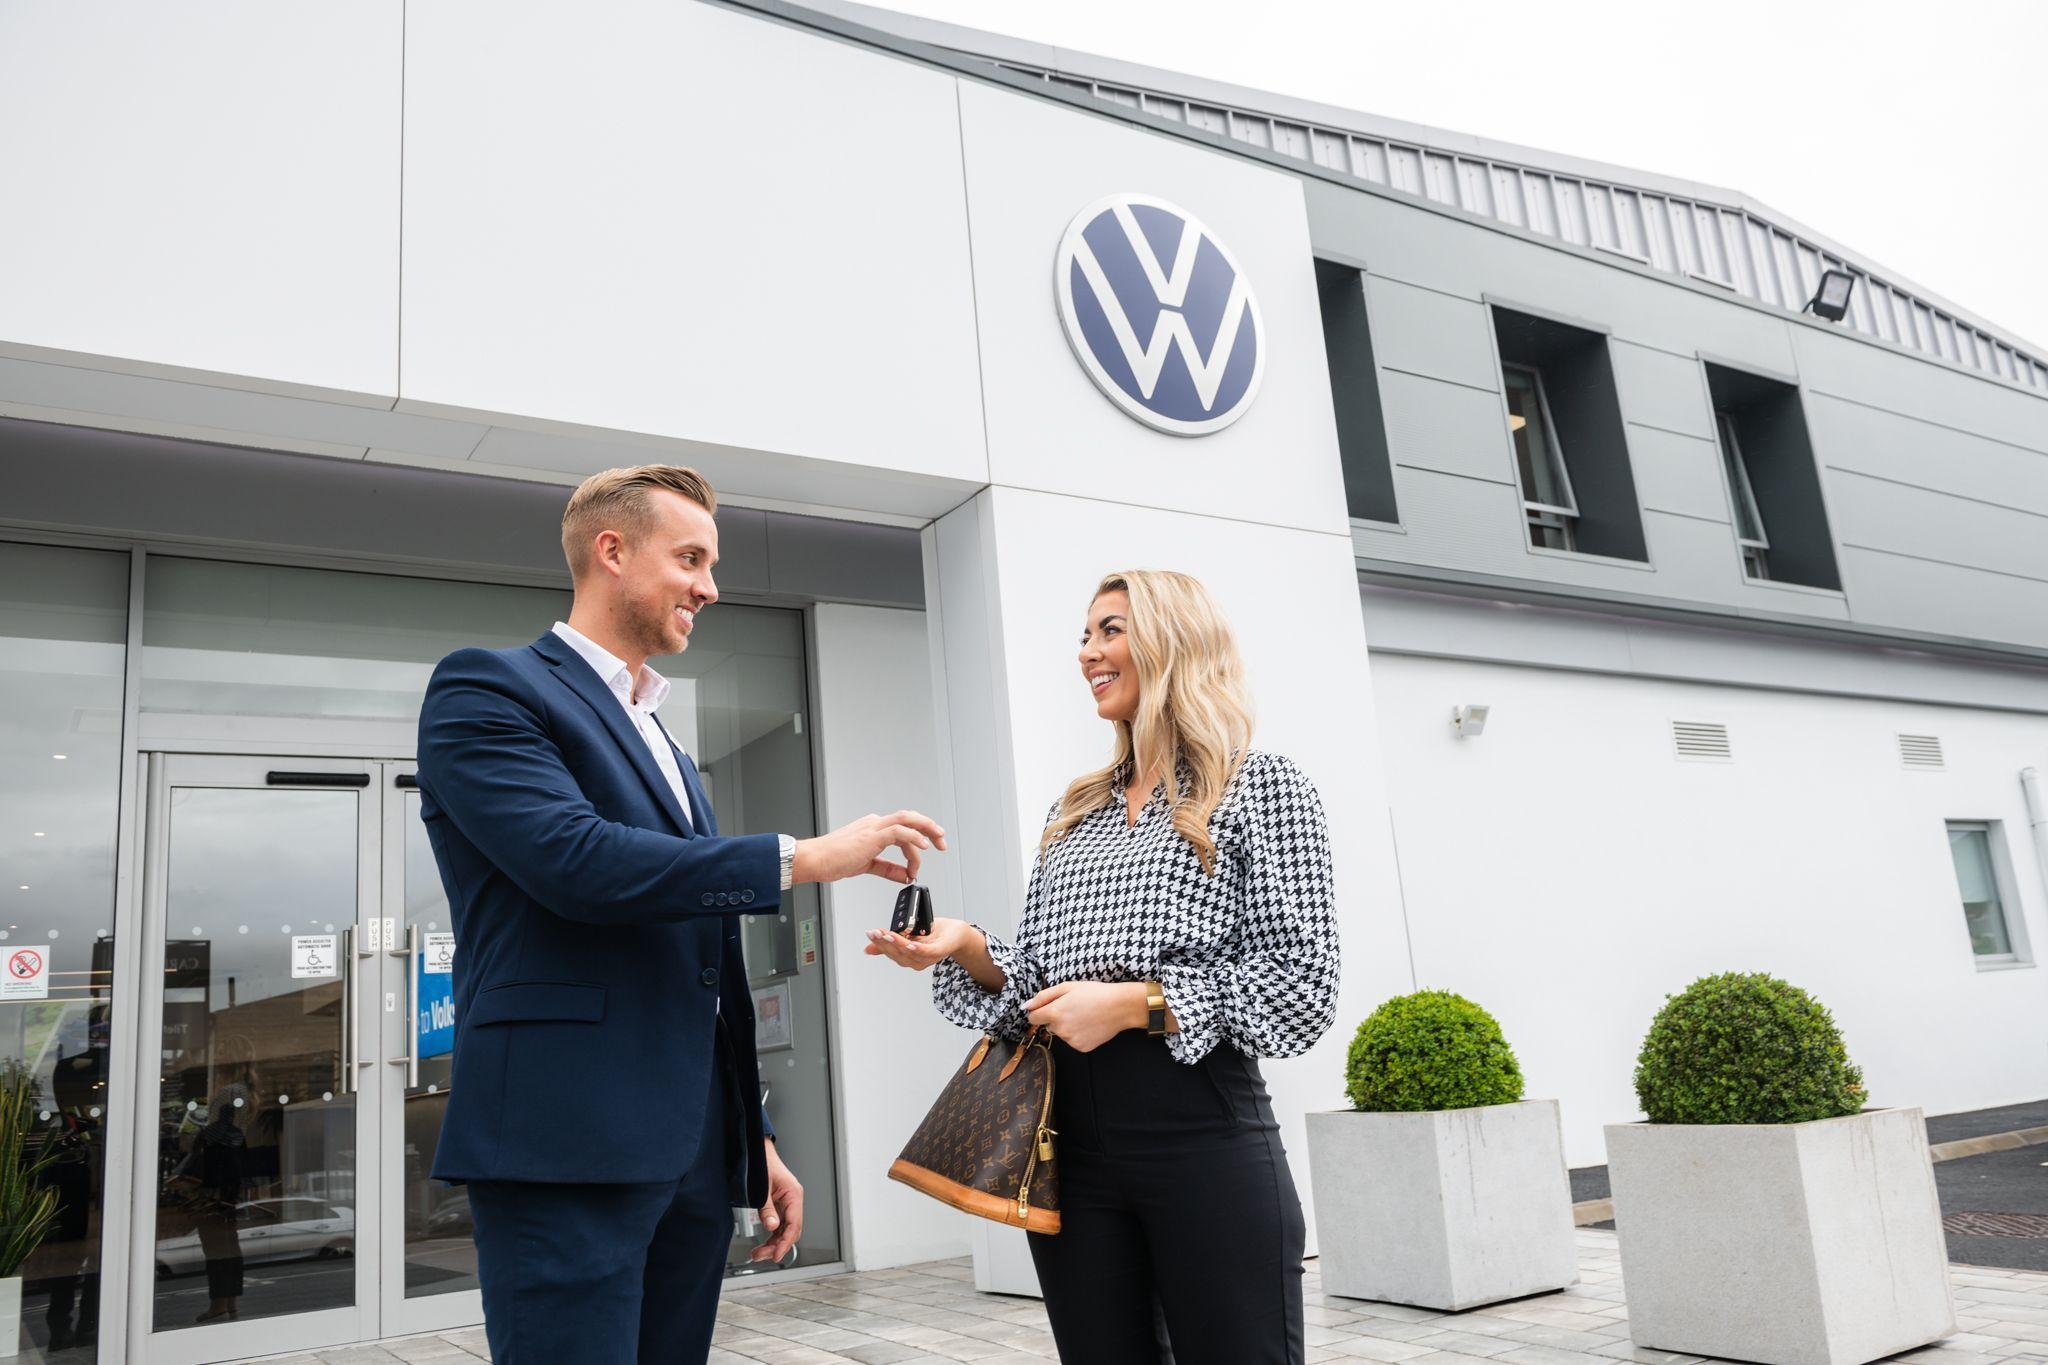 Volkswagen Service Advisor hands over keys to customer after maintenance work